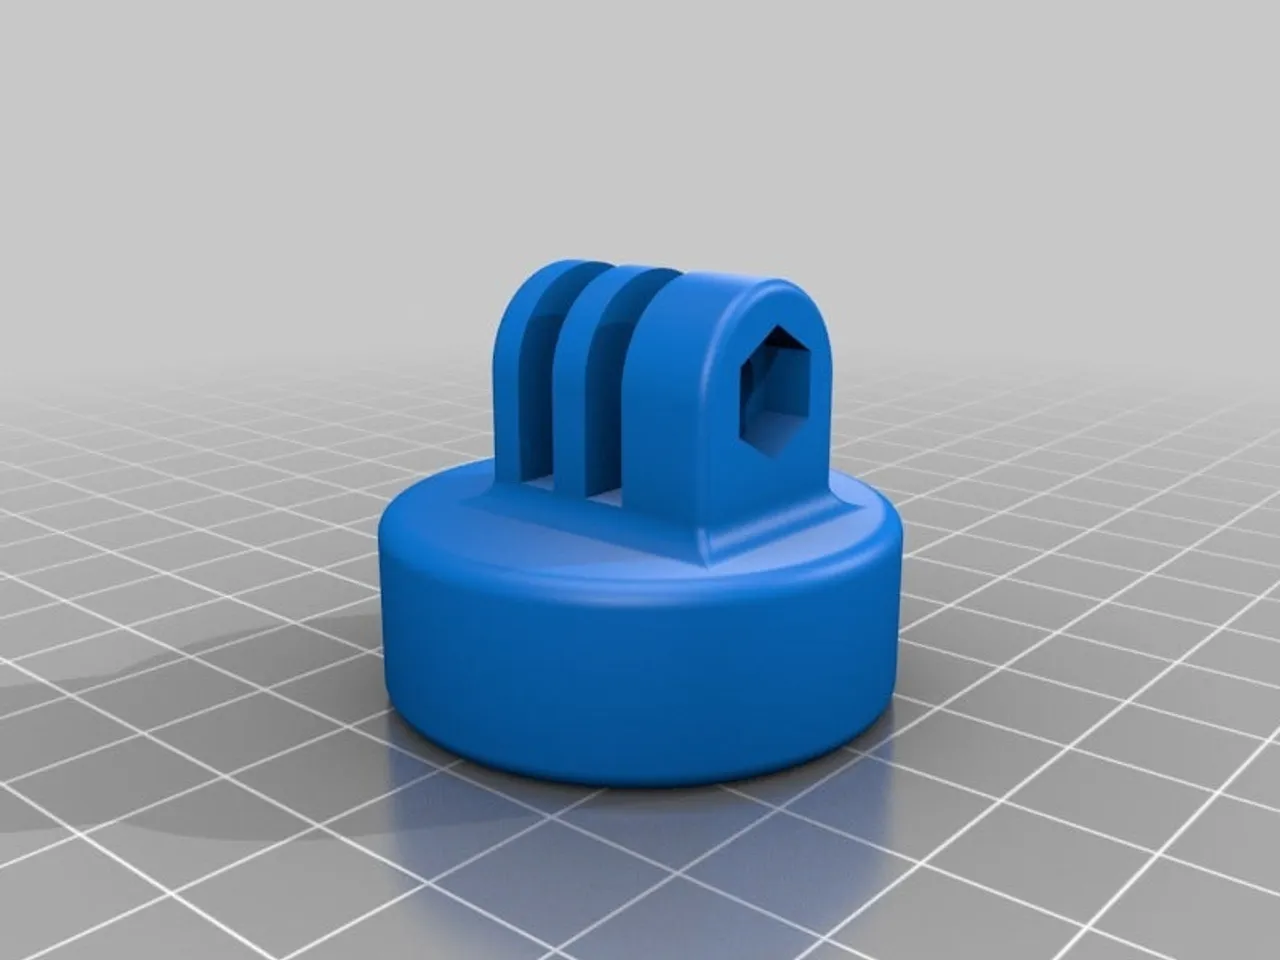 Gopro tripod mount - action camera tripod 1-4 screw adapter 3D model 3D  printable